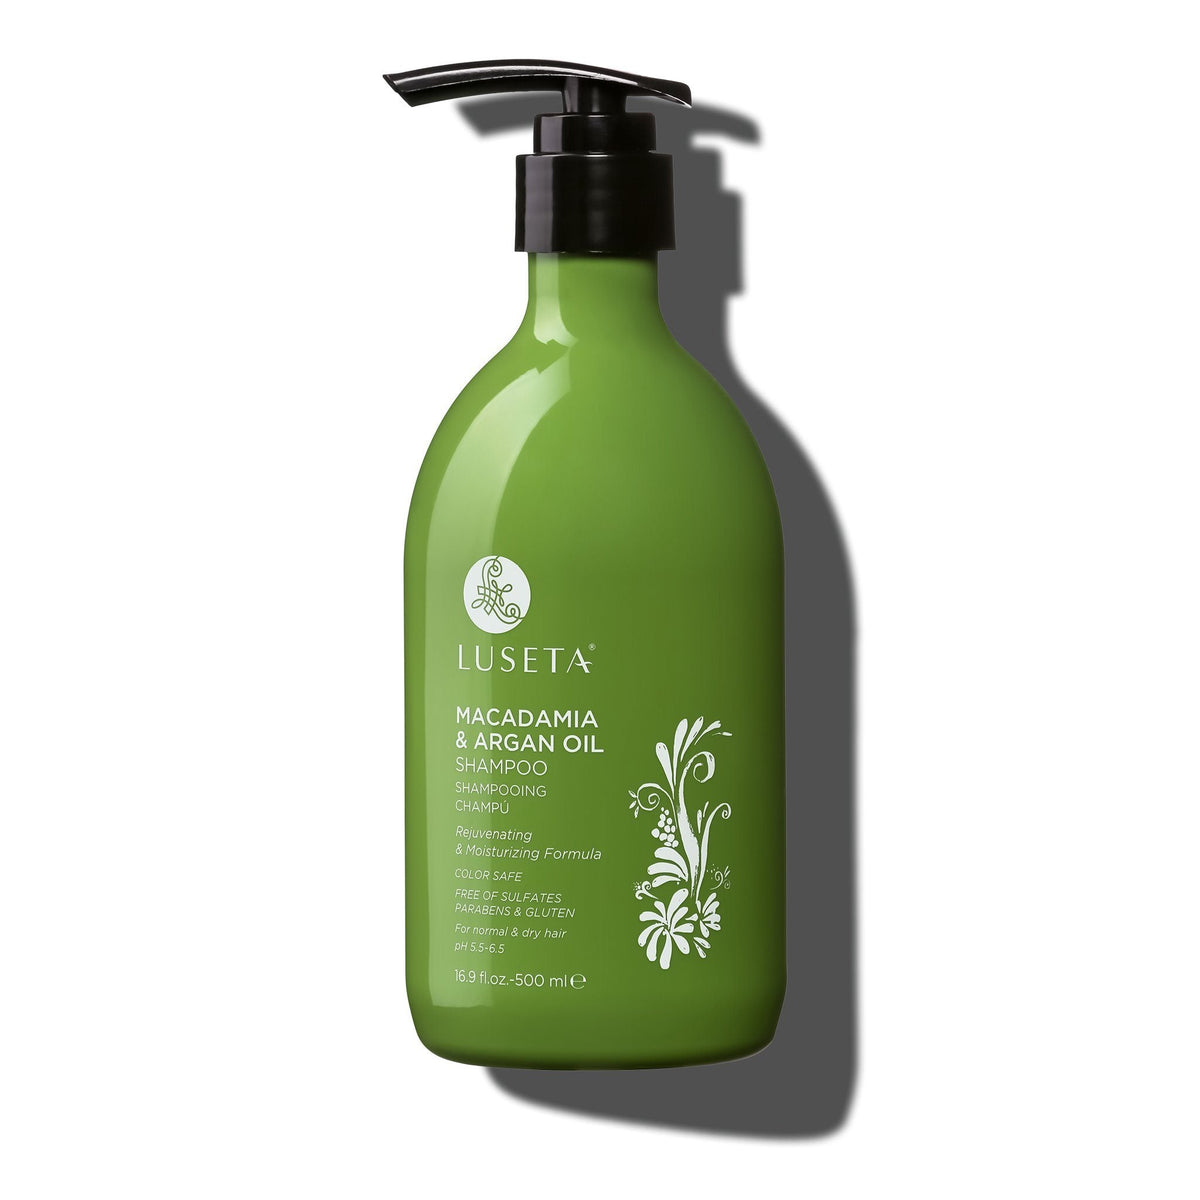 Macadamia & Argan Oil Shampoo - 16.9oz - by Luseta Beauty |ProCare Outlet|